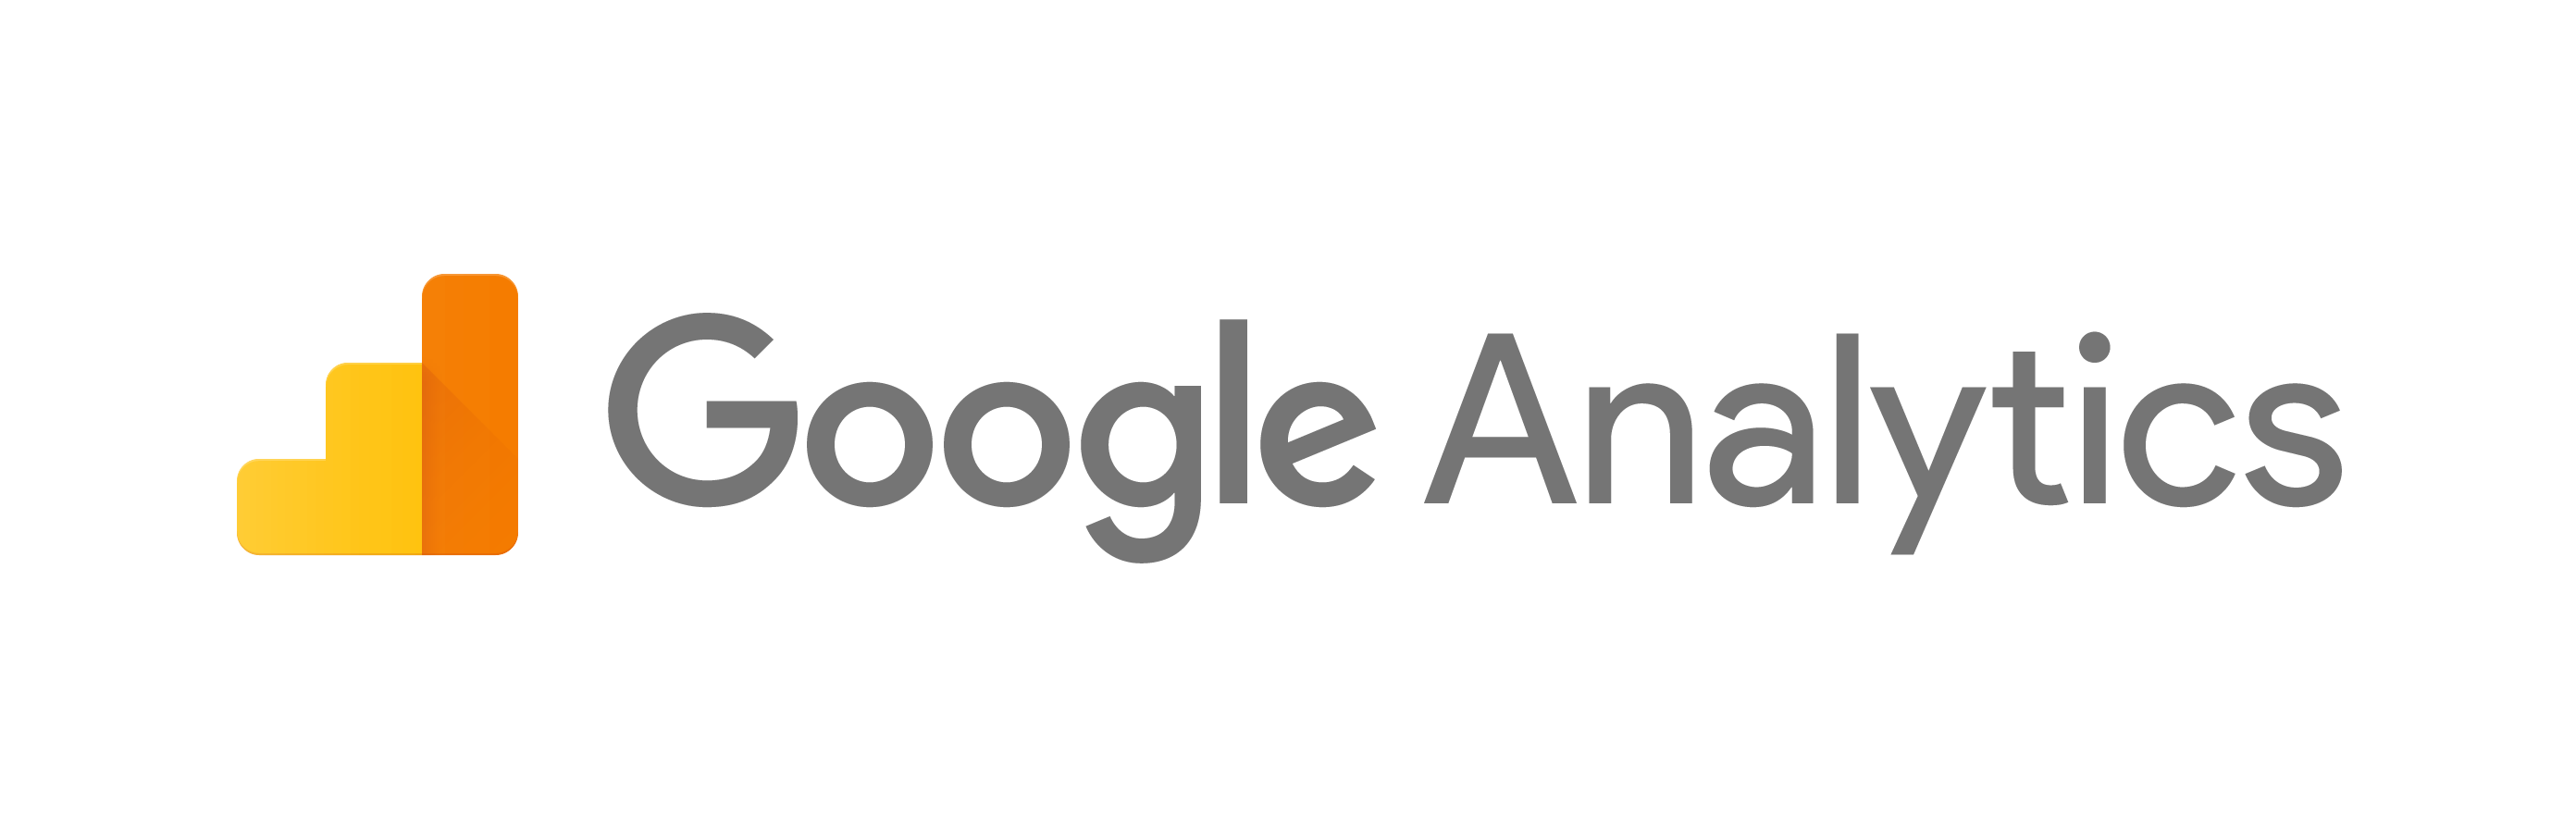 Google アナリティクスのロゴ